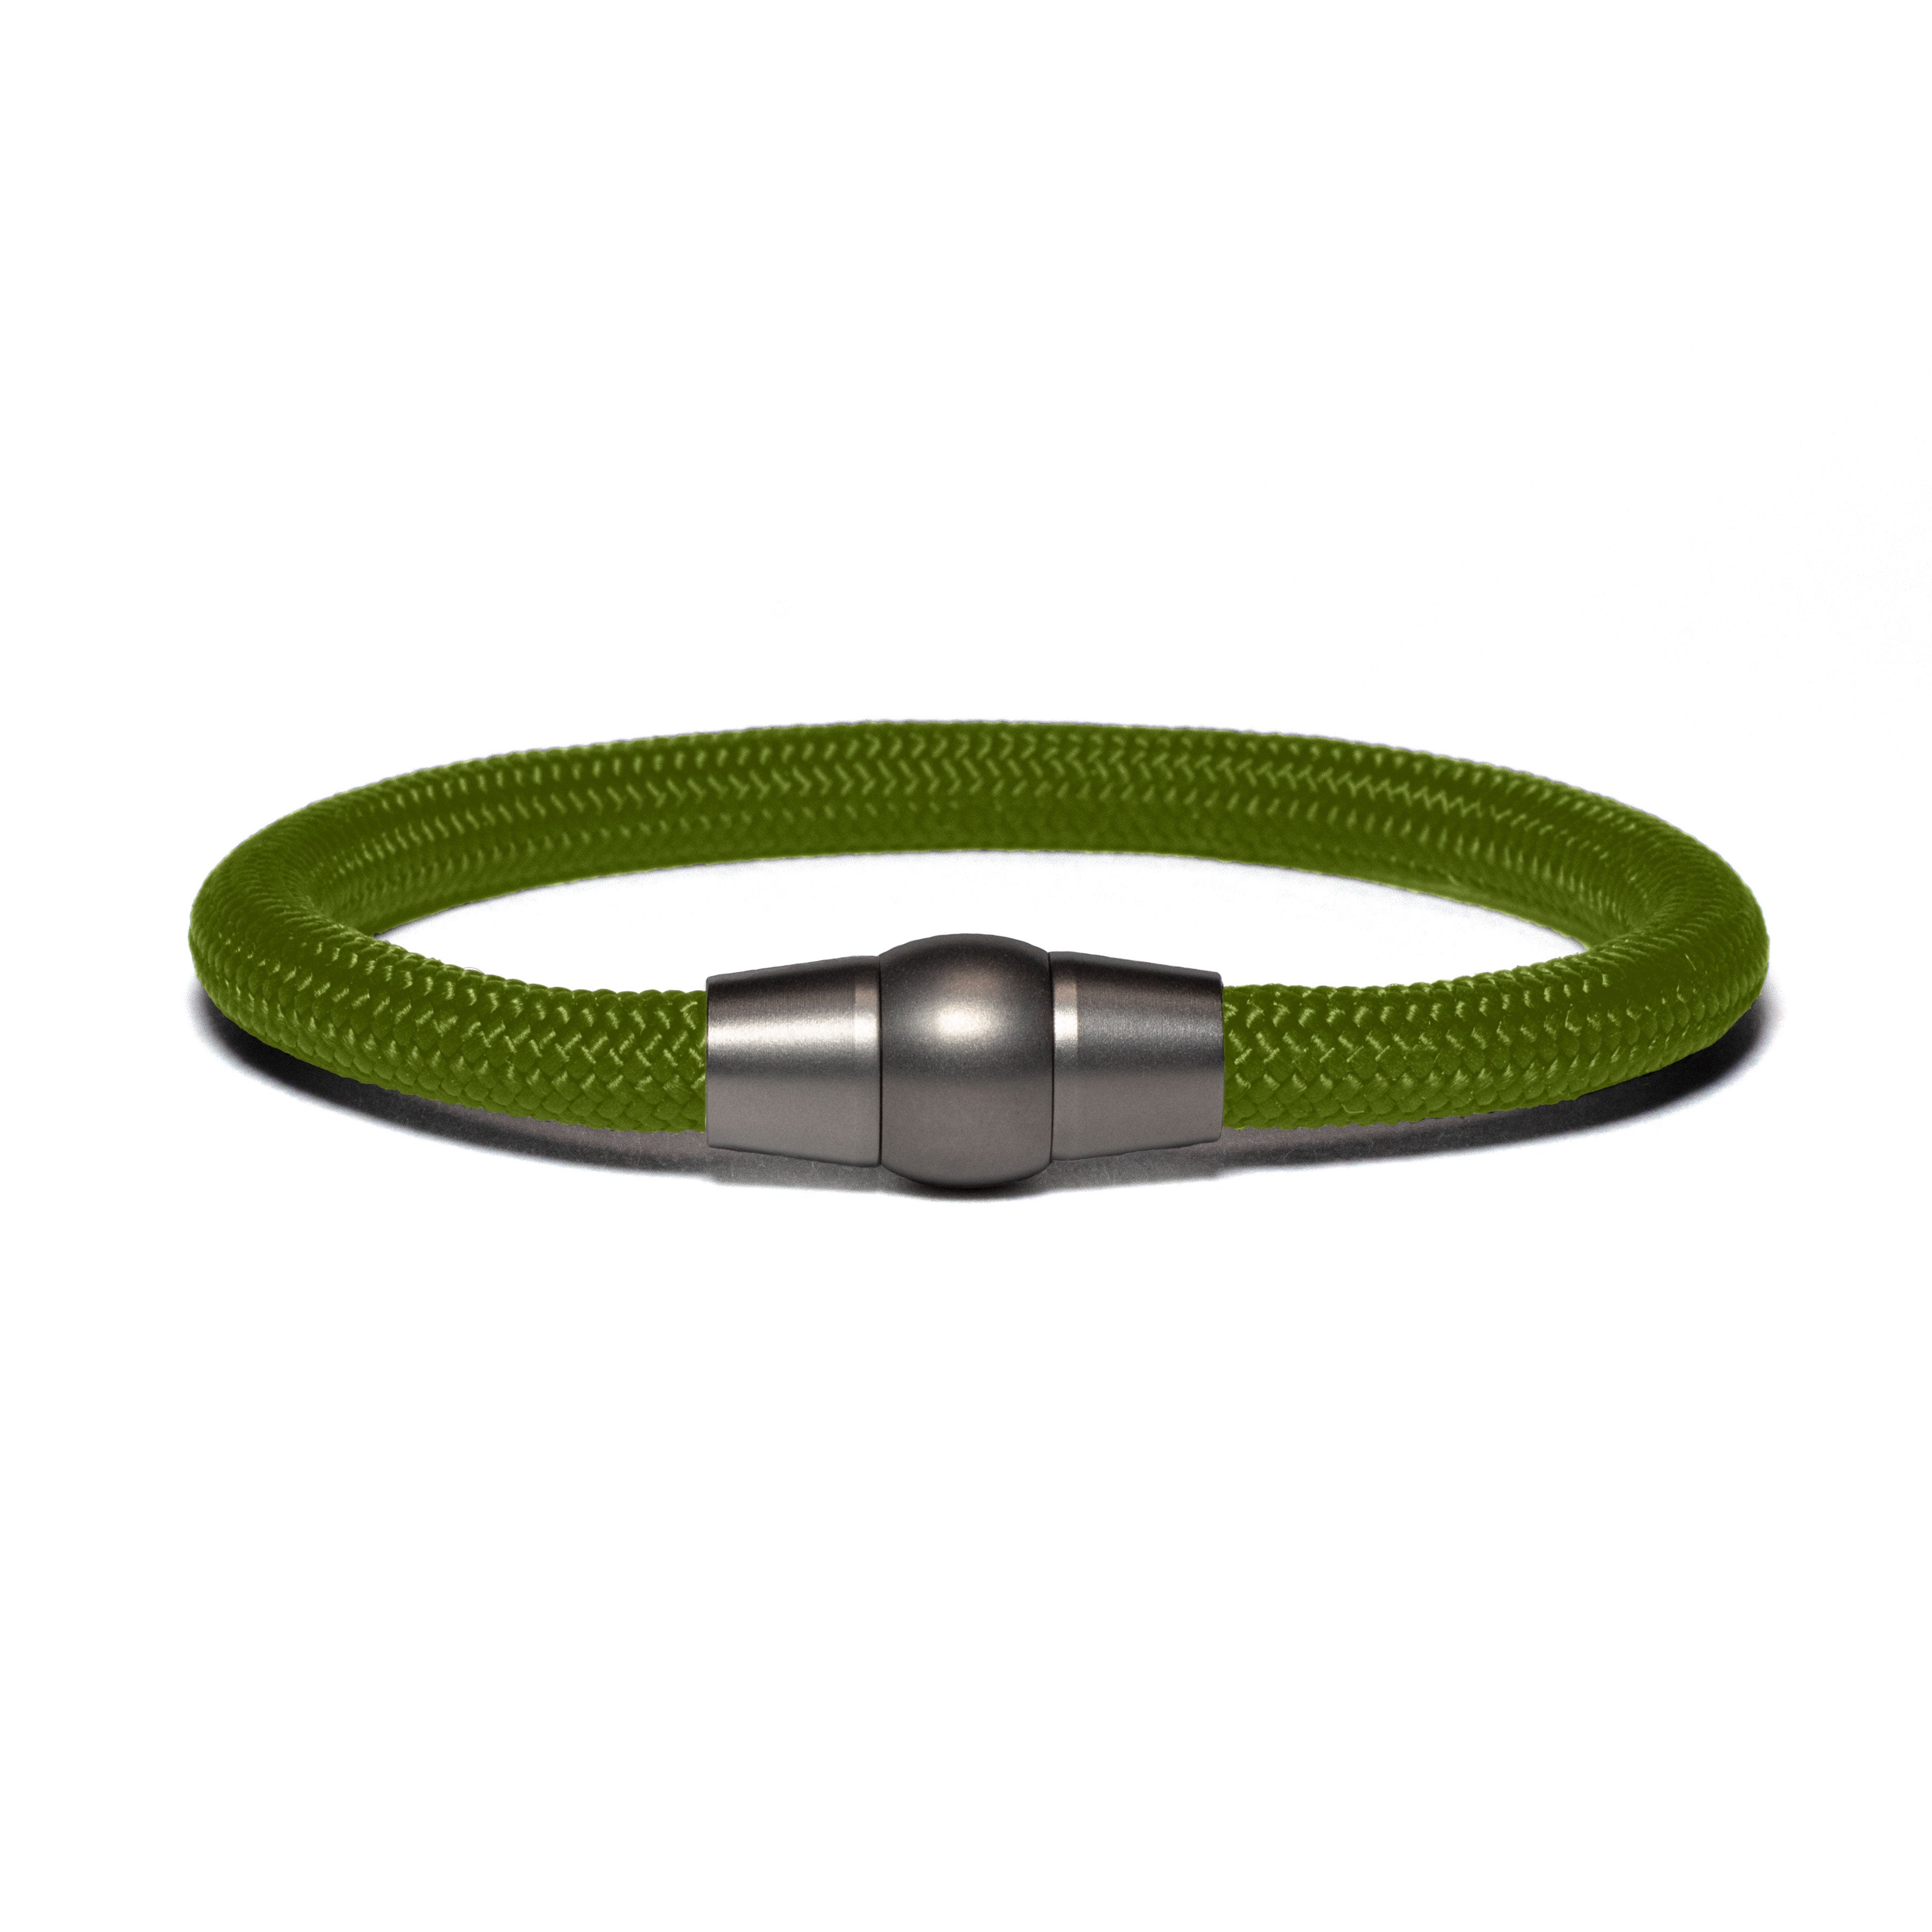 Bracelet basic - olive green paracord